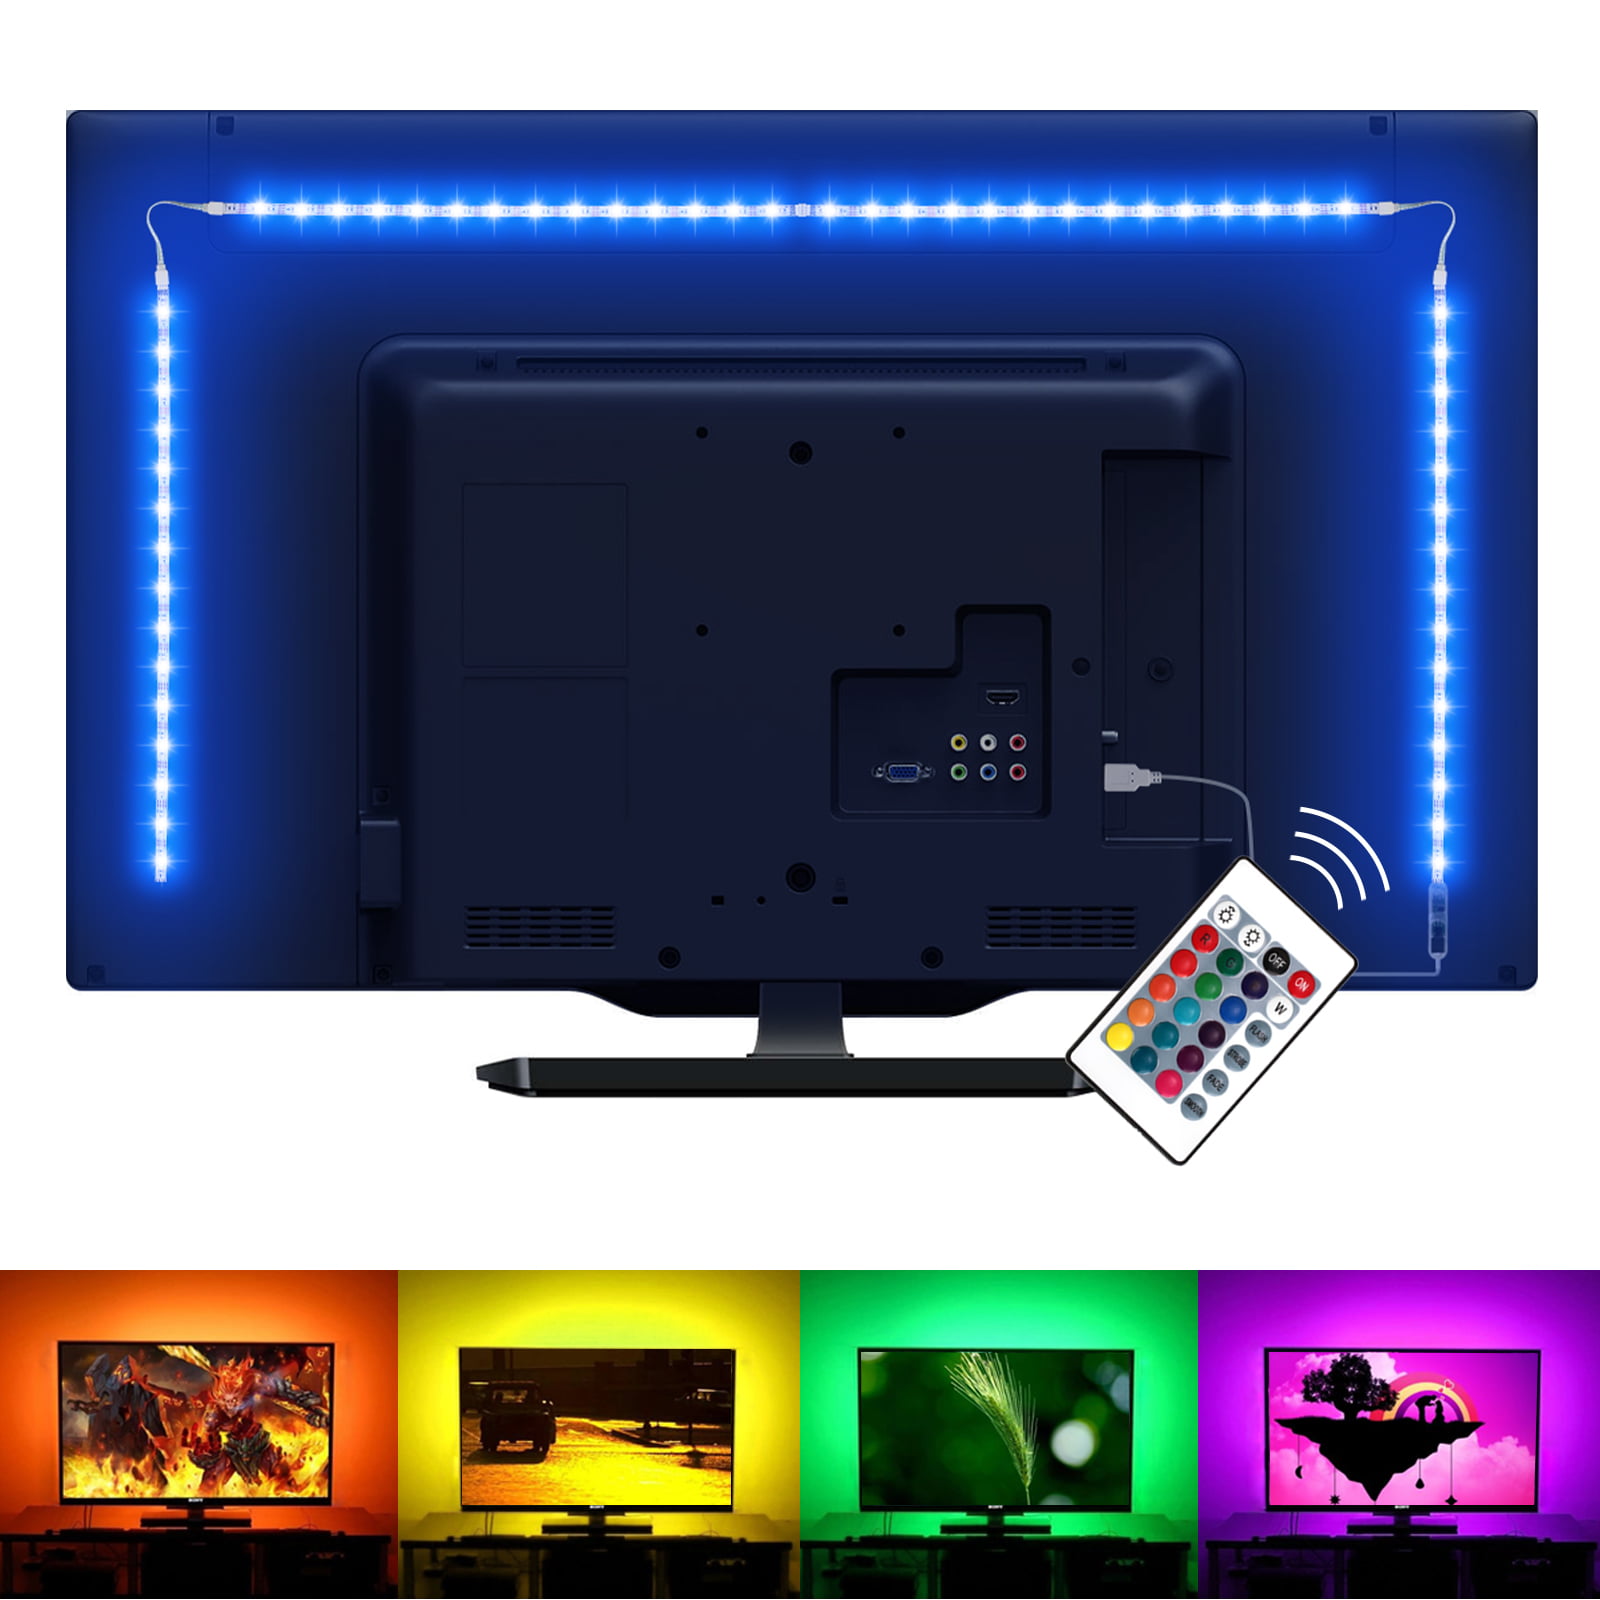 LEBRIGHT USB led Strip LED TV Backlight,39 Inch 5V RGB Led Strip Lights Kit for TV Gaming,Multi Color Waterproof Bias Lighting for HDTV Reduce Eye Fatigue and Increase Image Clarity 